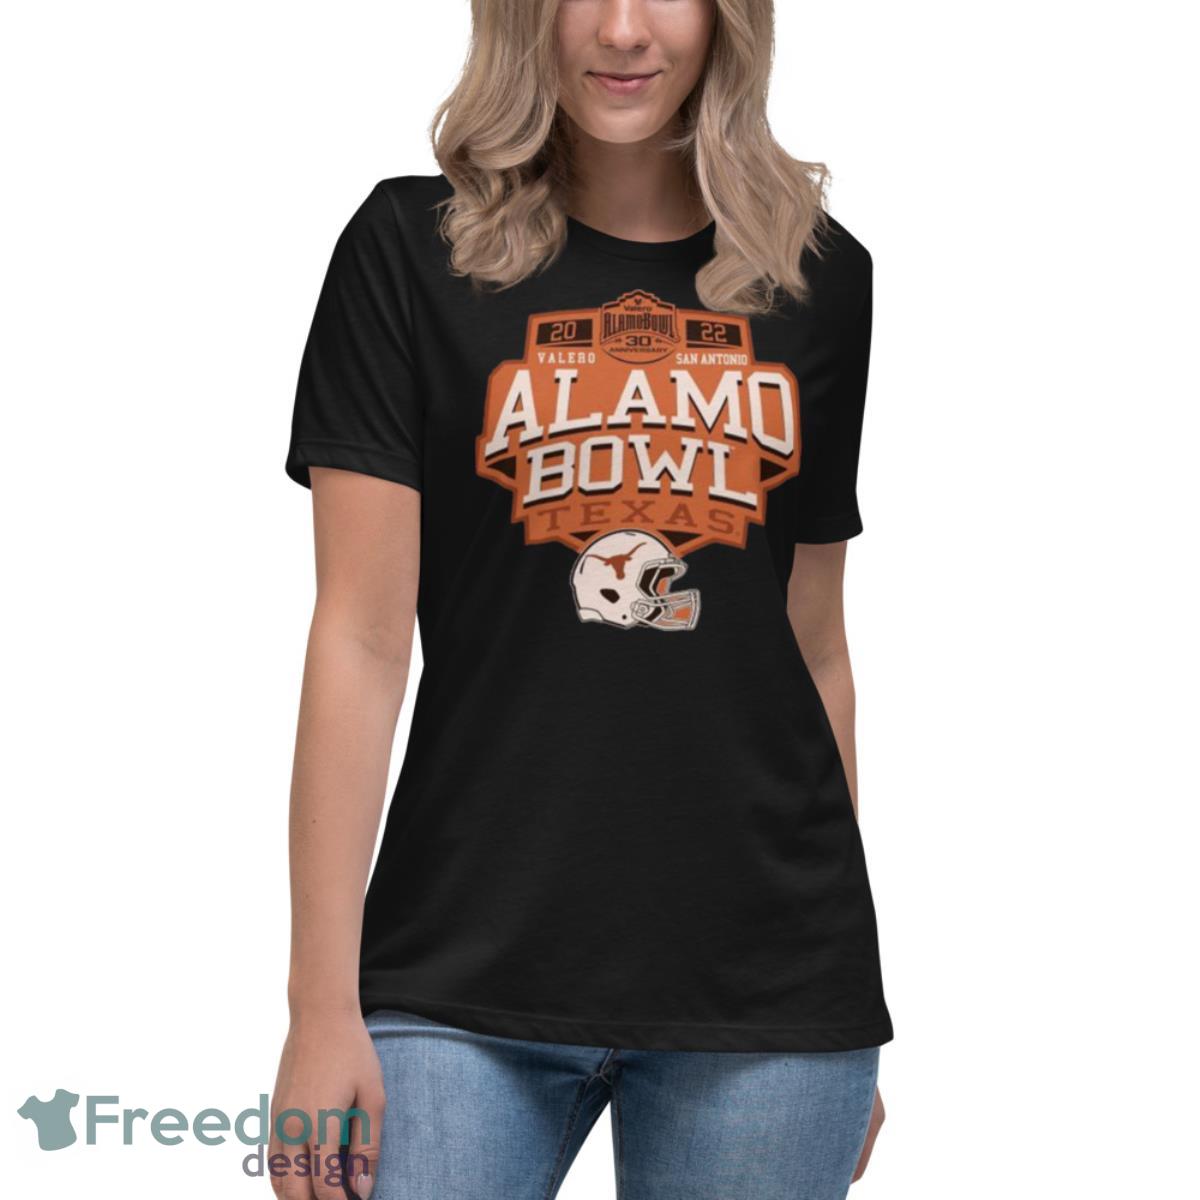 2022 Valero Alamo Bowl Texas Longhorn football shirt